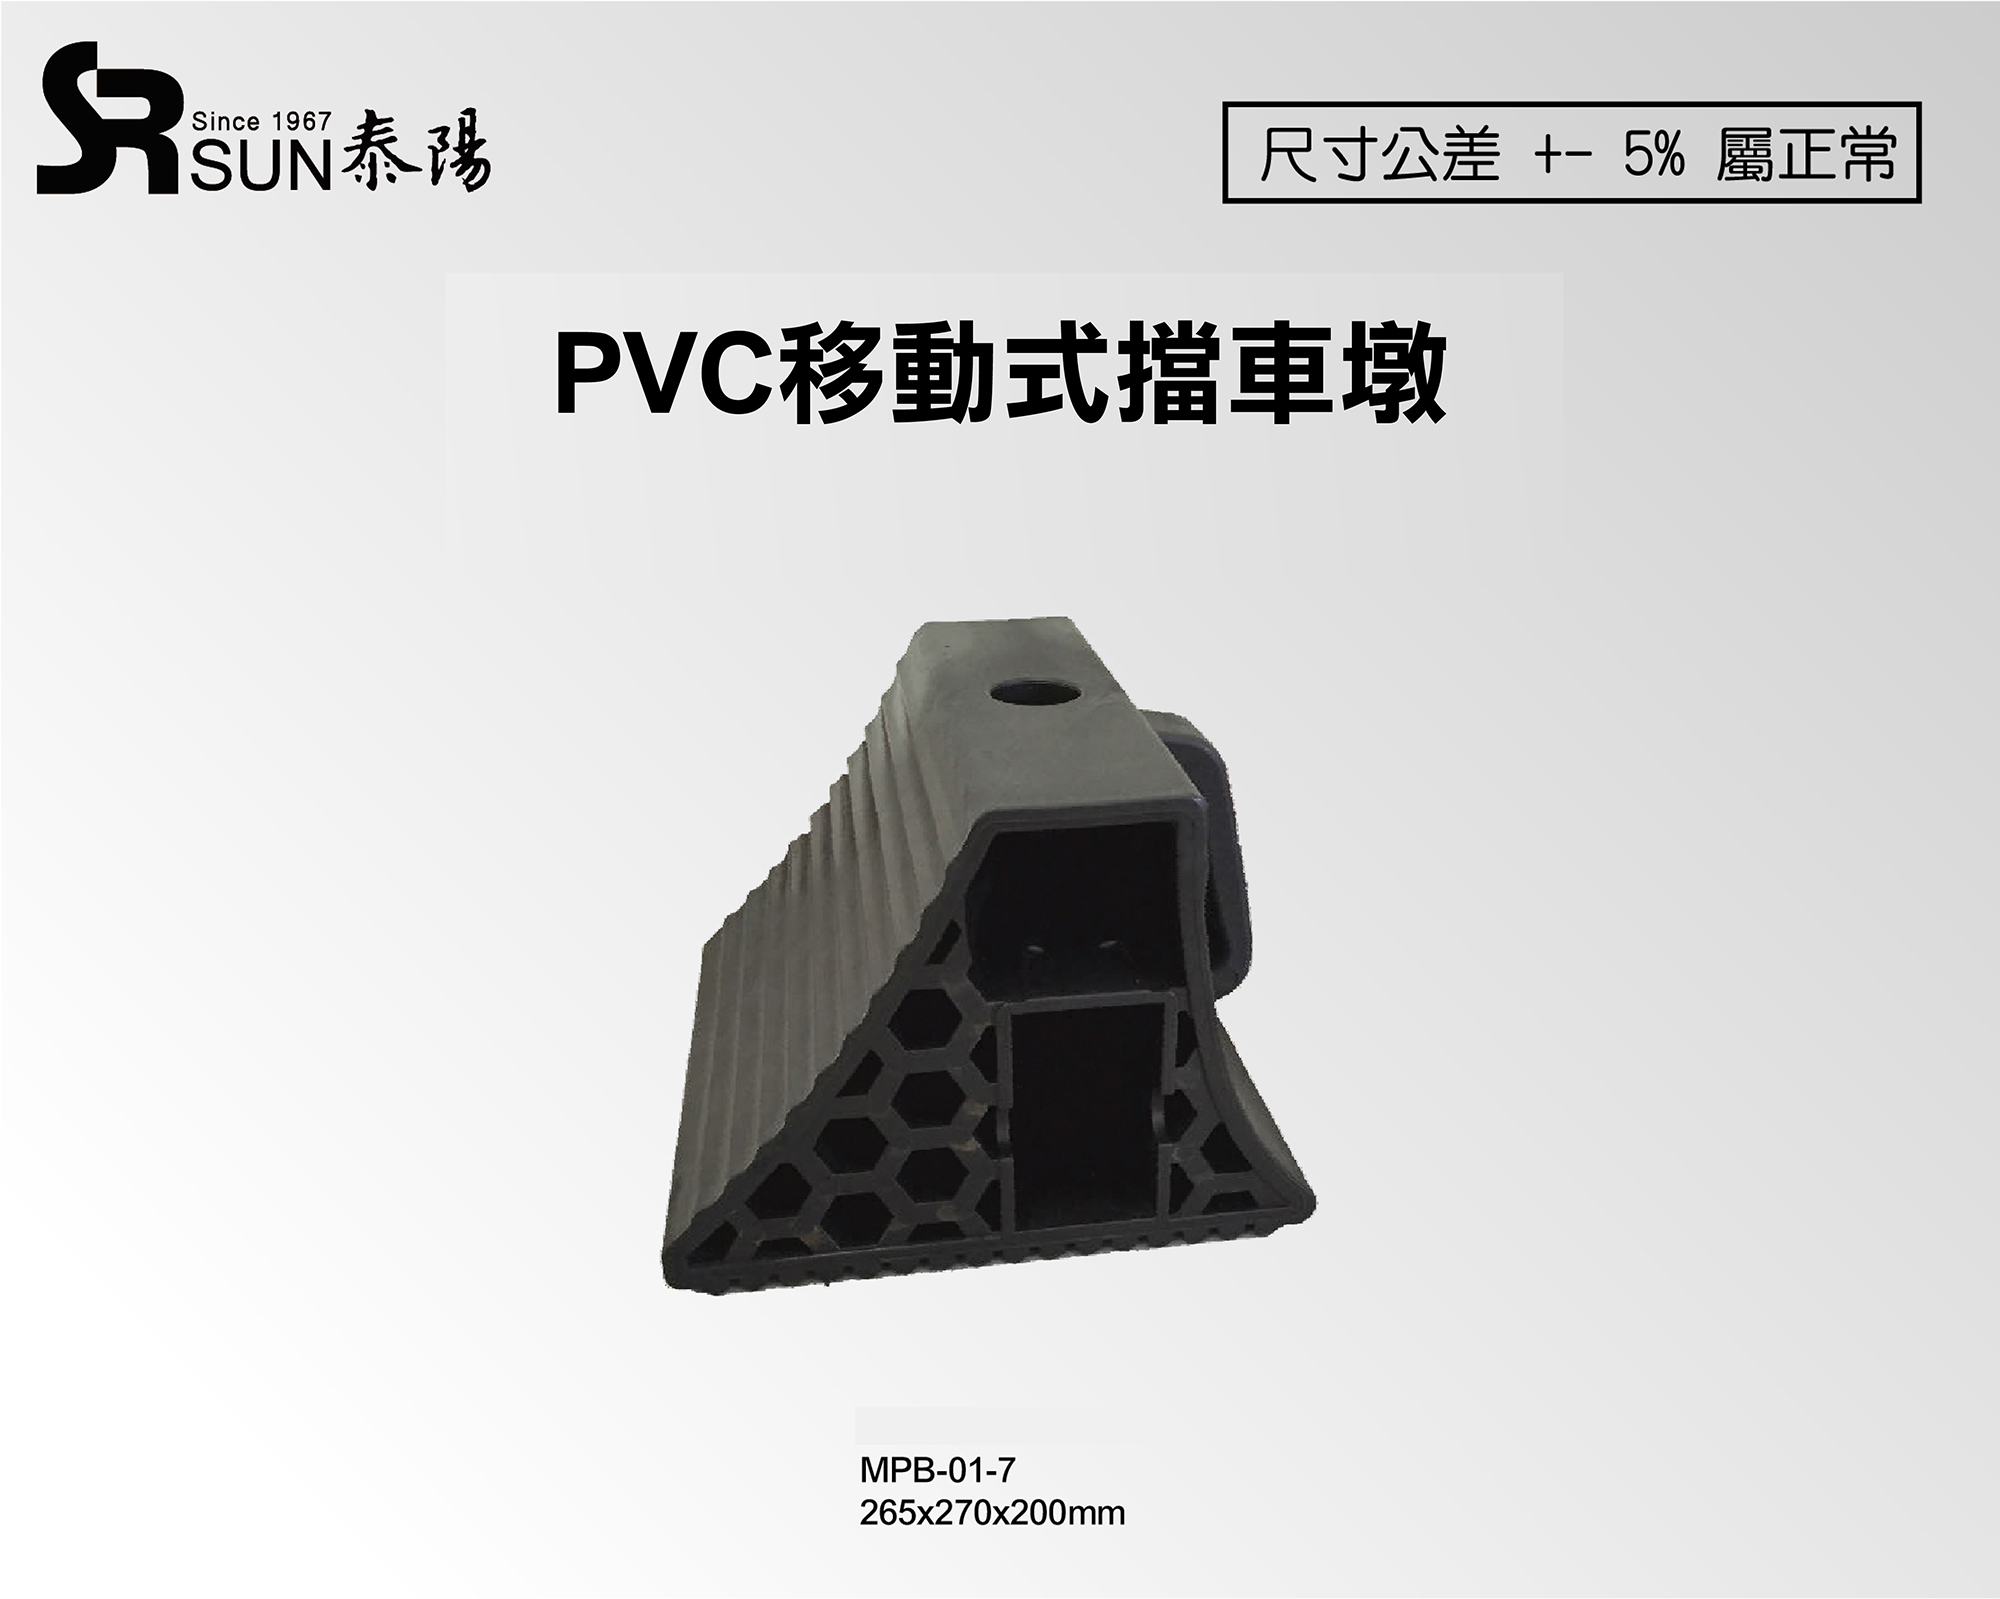 PVC移動擋車墩-265x270x200mm(MPB-01-7)